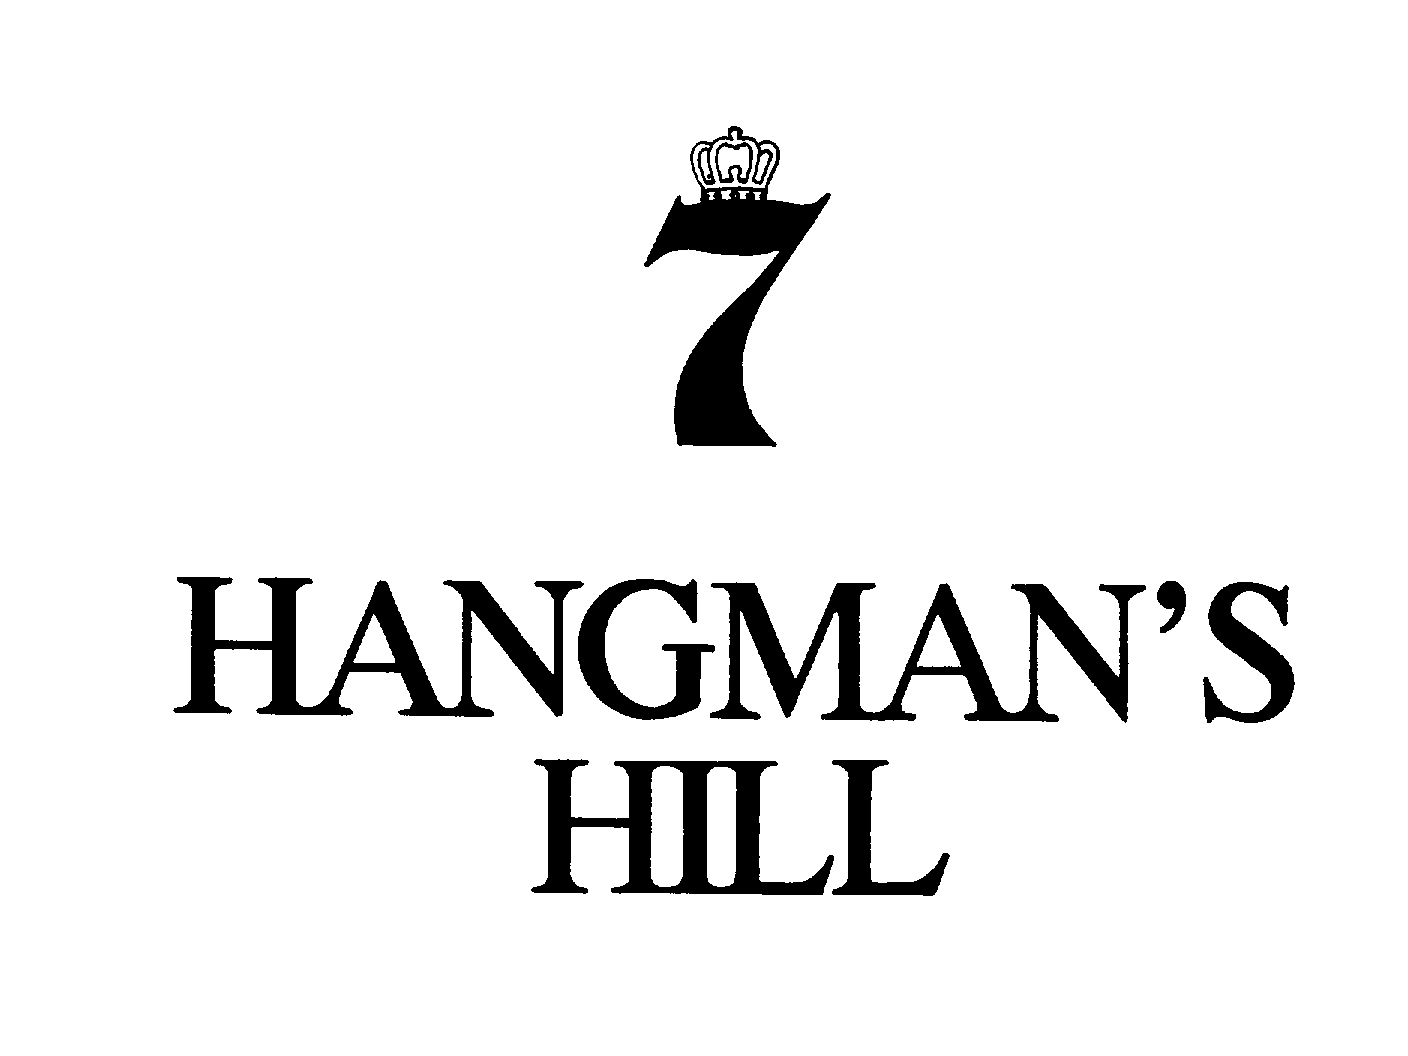  7 HANGMAN'S HILL